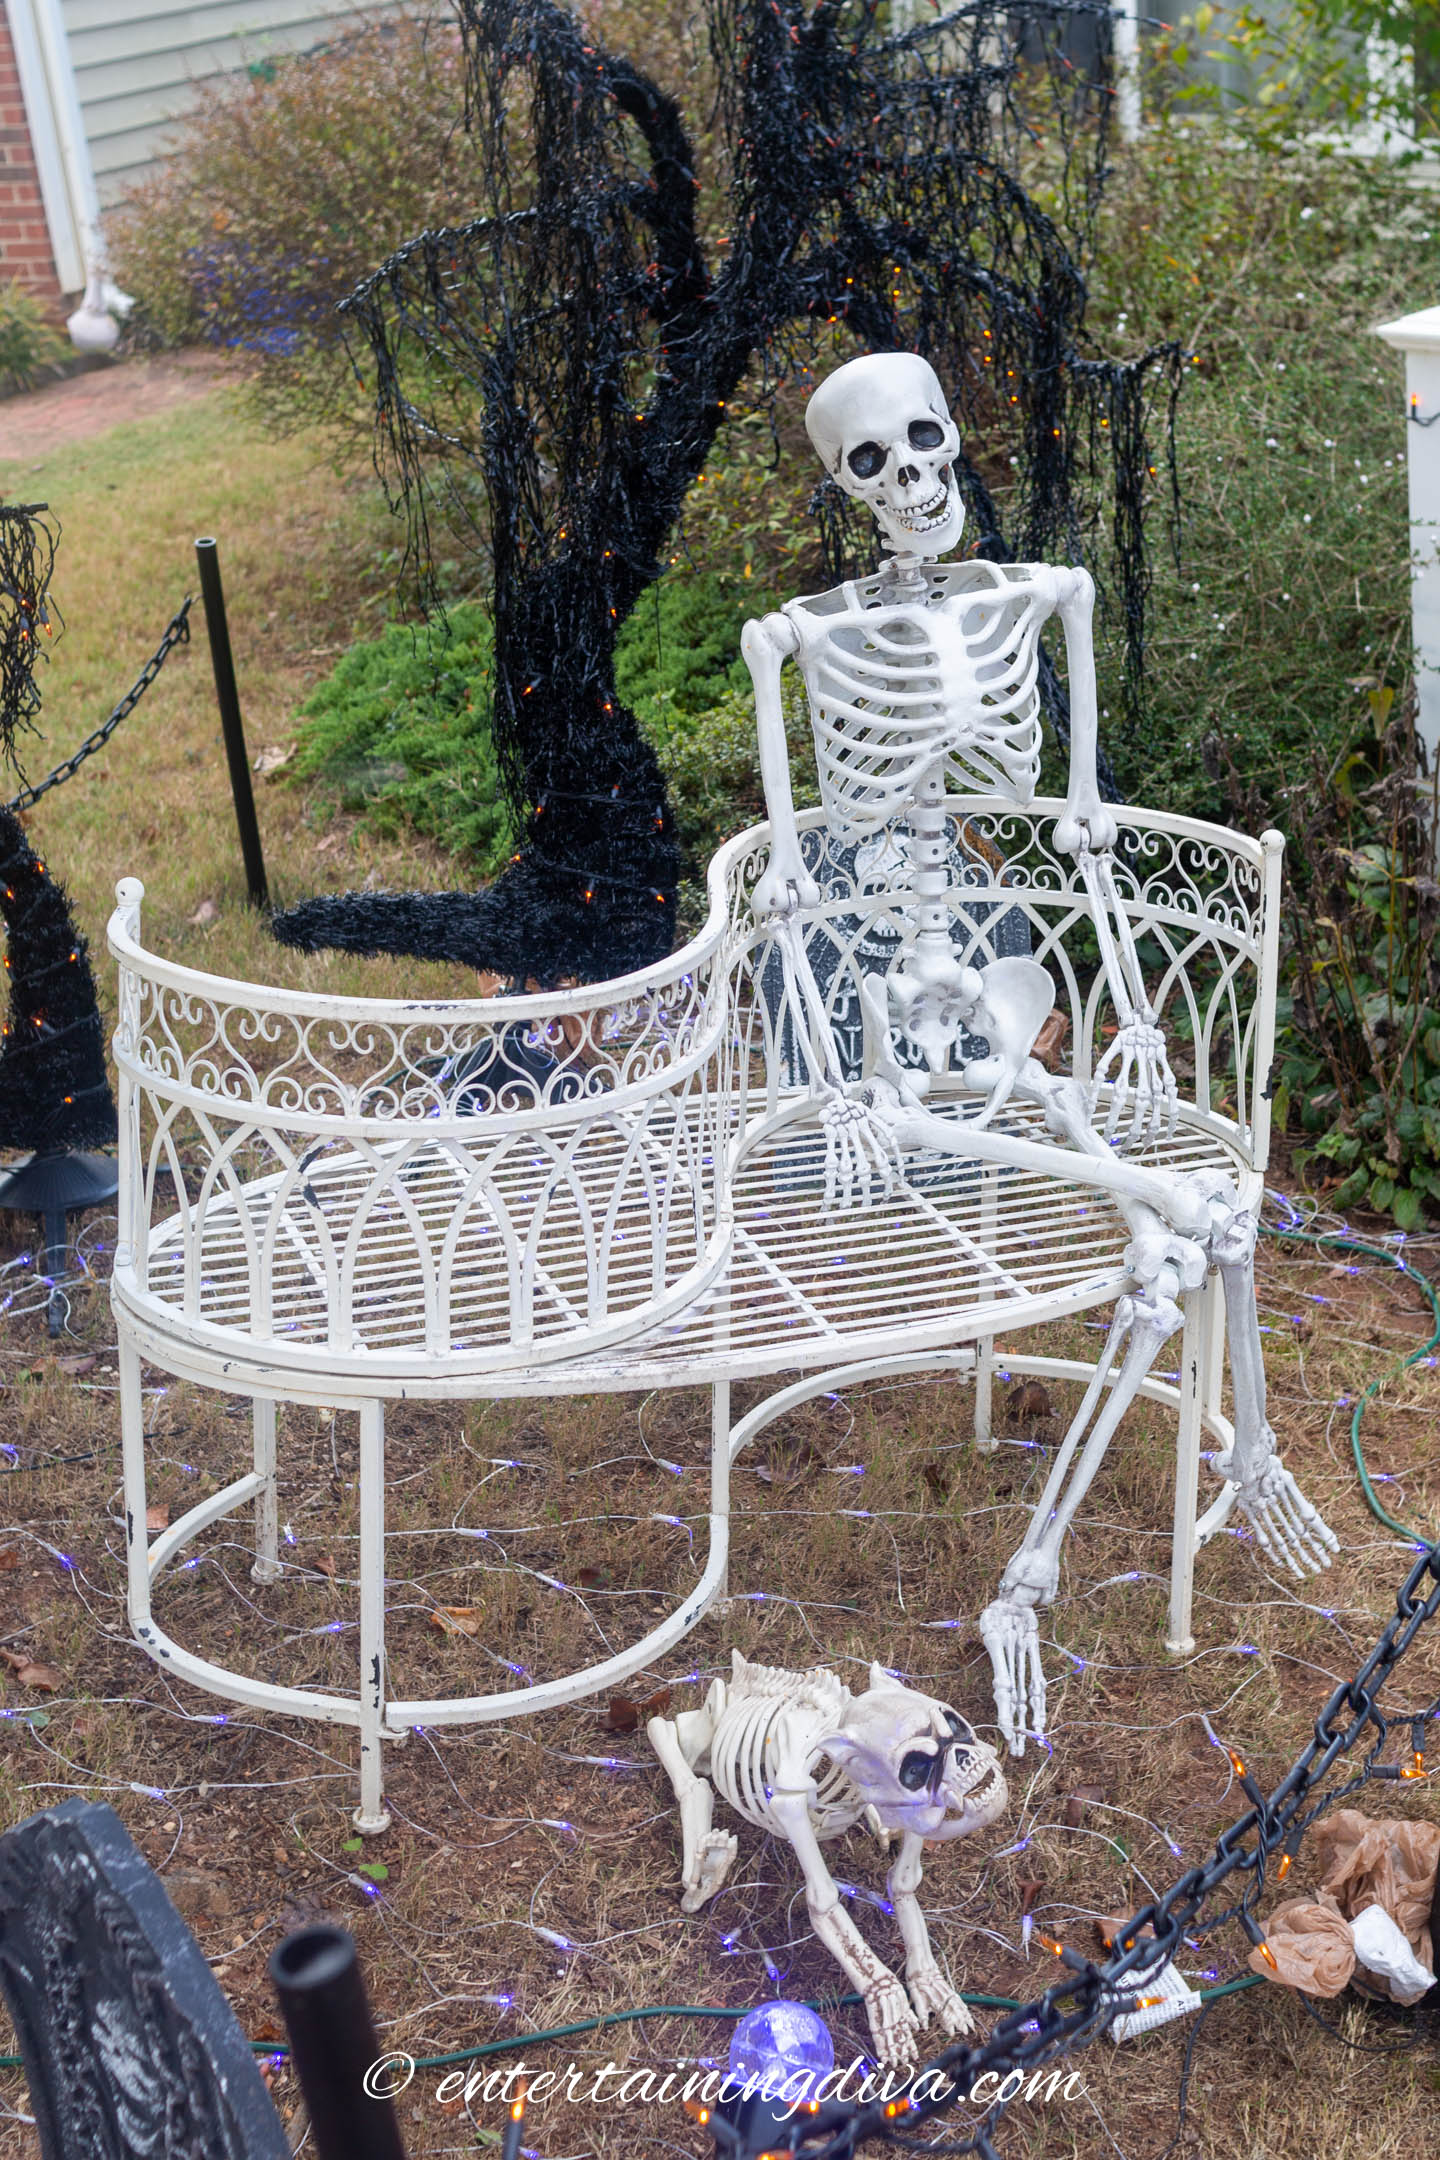 Skeleton sitting on a garden bench with a skeleton dog